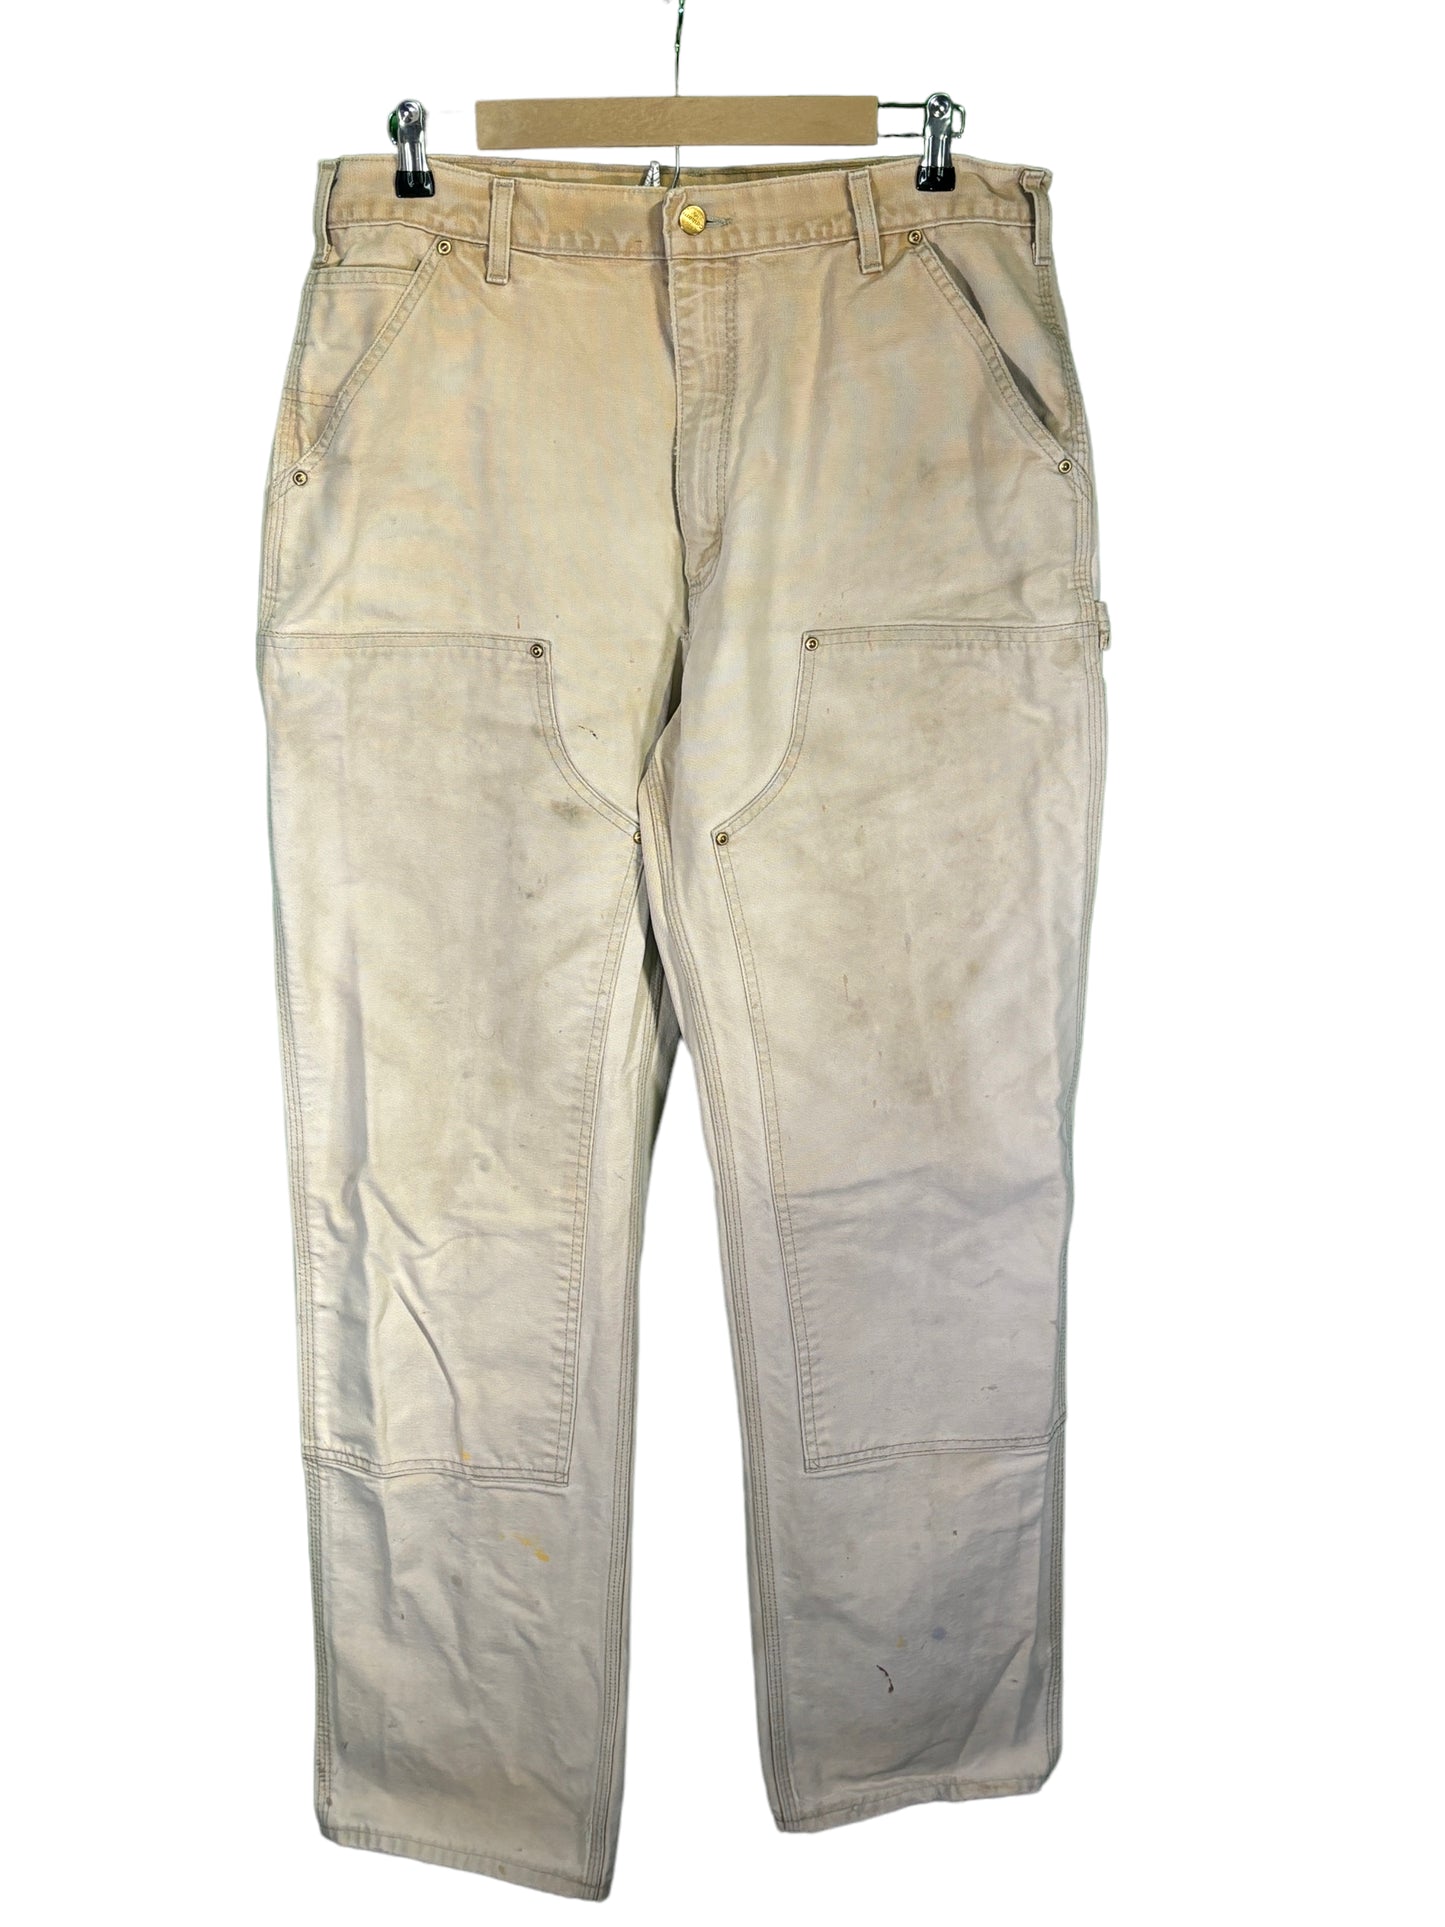 Vintage Carhartt Distressed Light Brown Double Knee Carpenter Pants Size 35x32